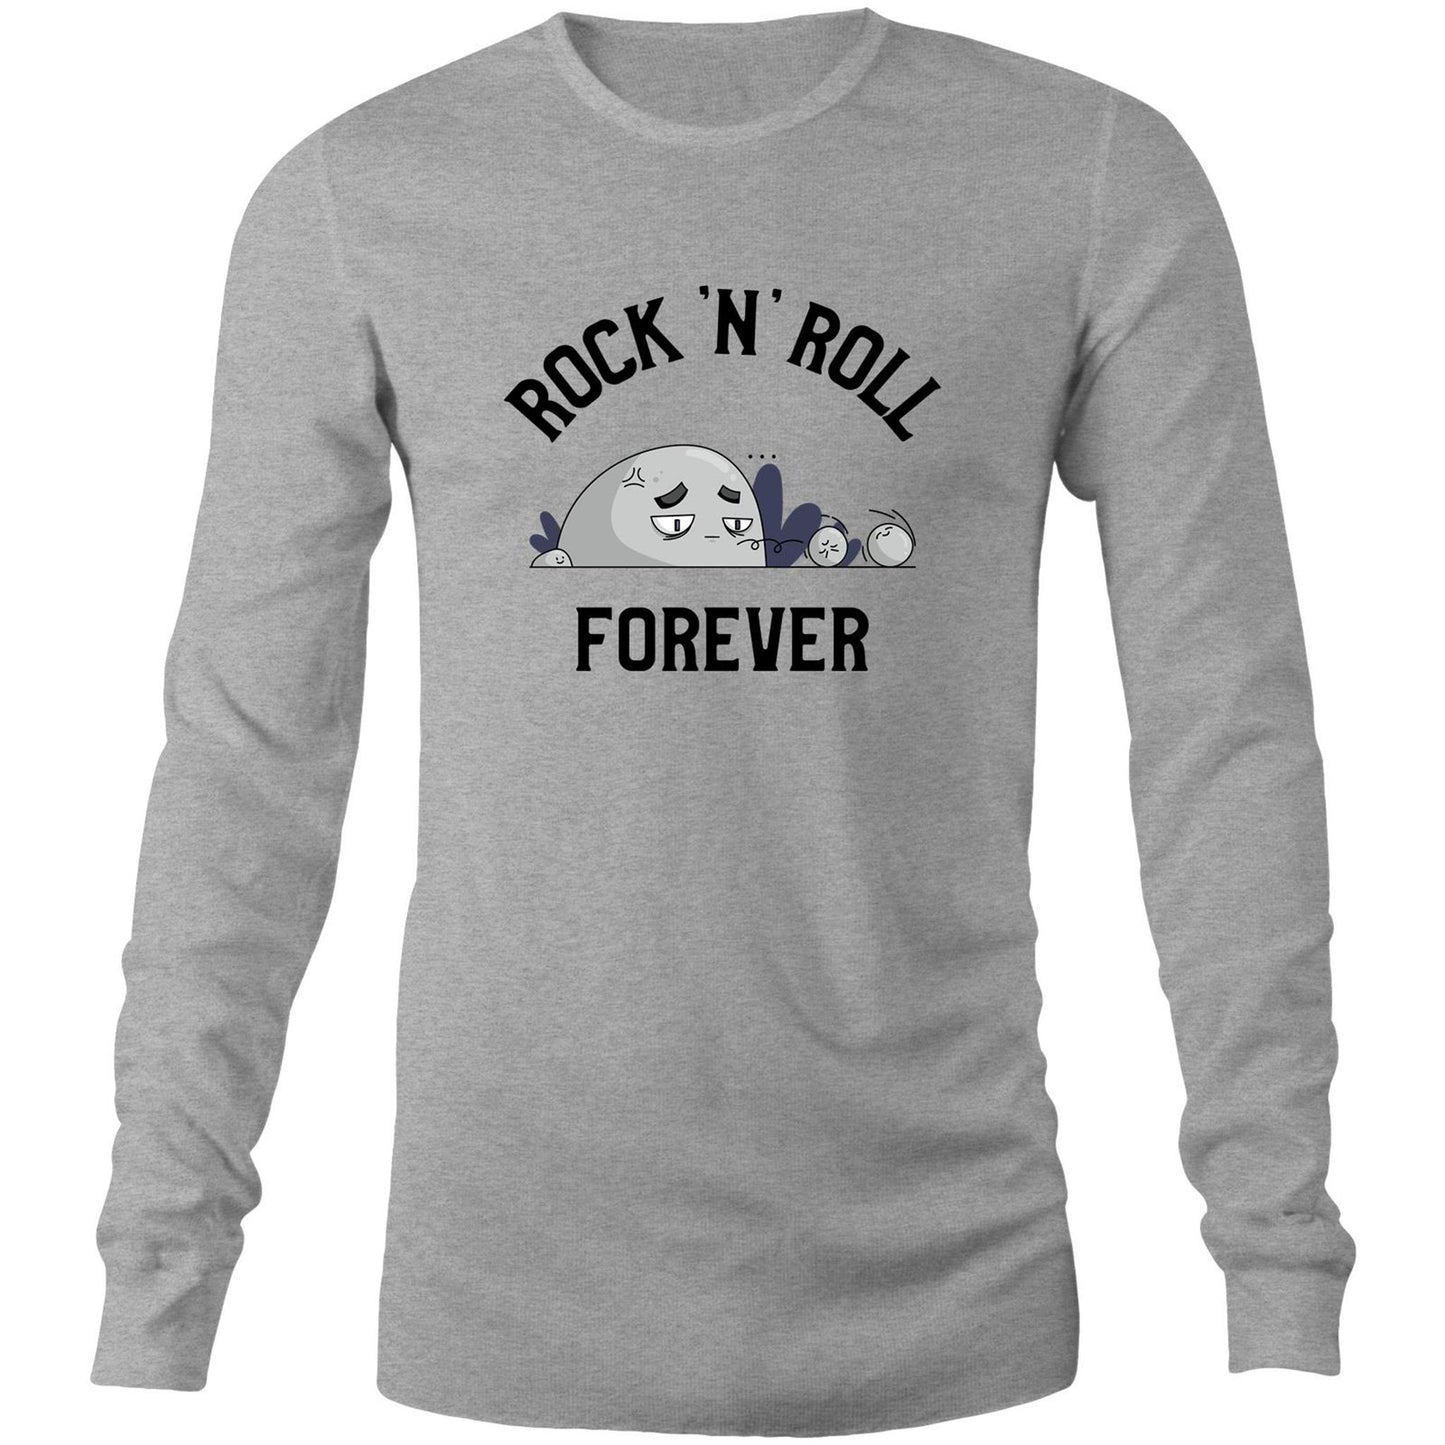 Rock 'N' Roll Forever - Long Sleeve T-Shirt Grey Marle Unisex Long Sleeve T-shirt Music